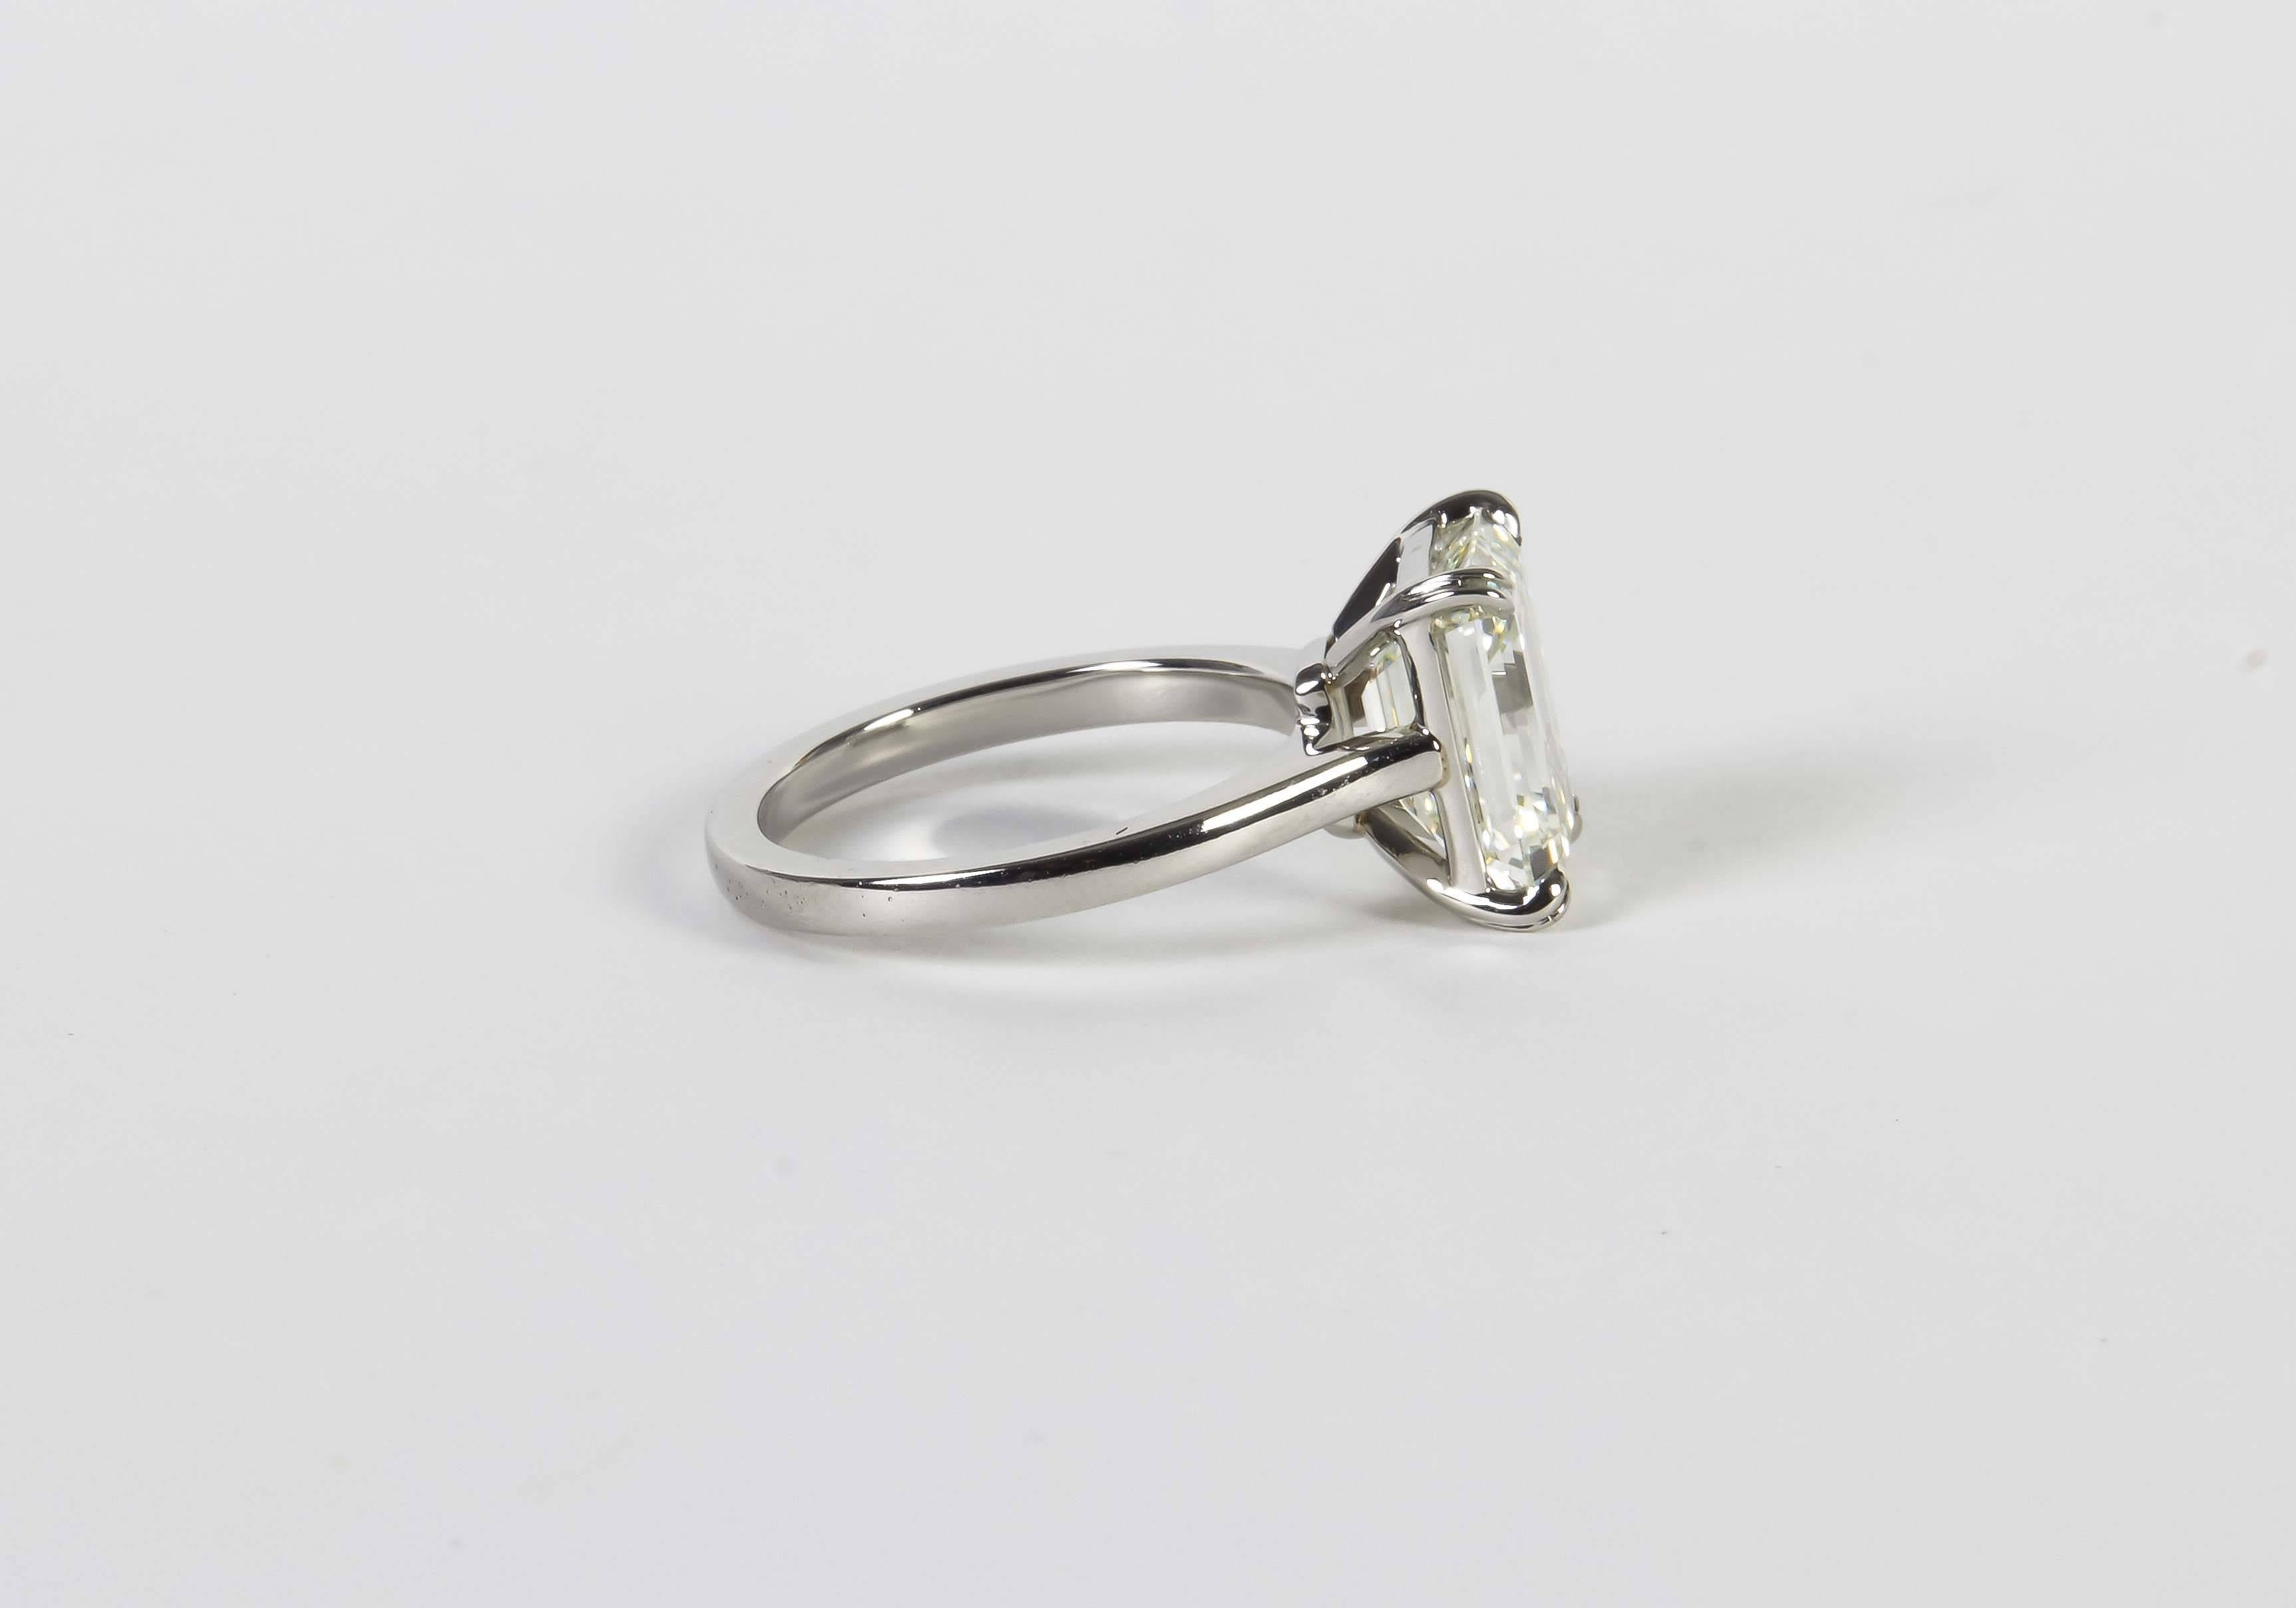 426 carat diamond ring